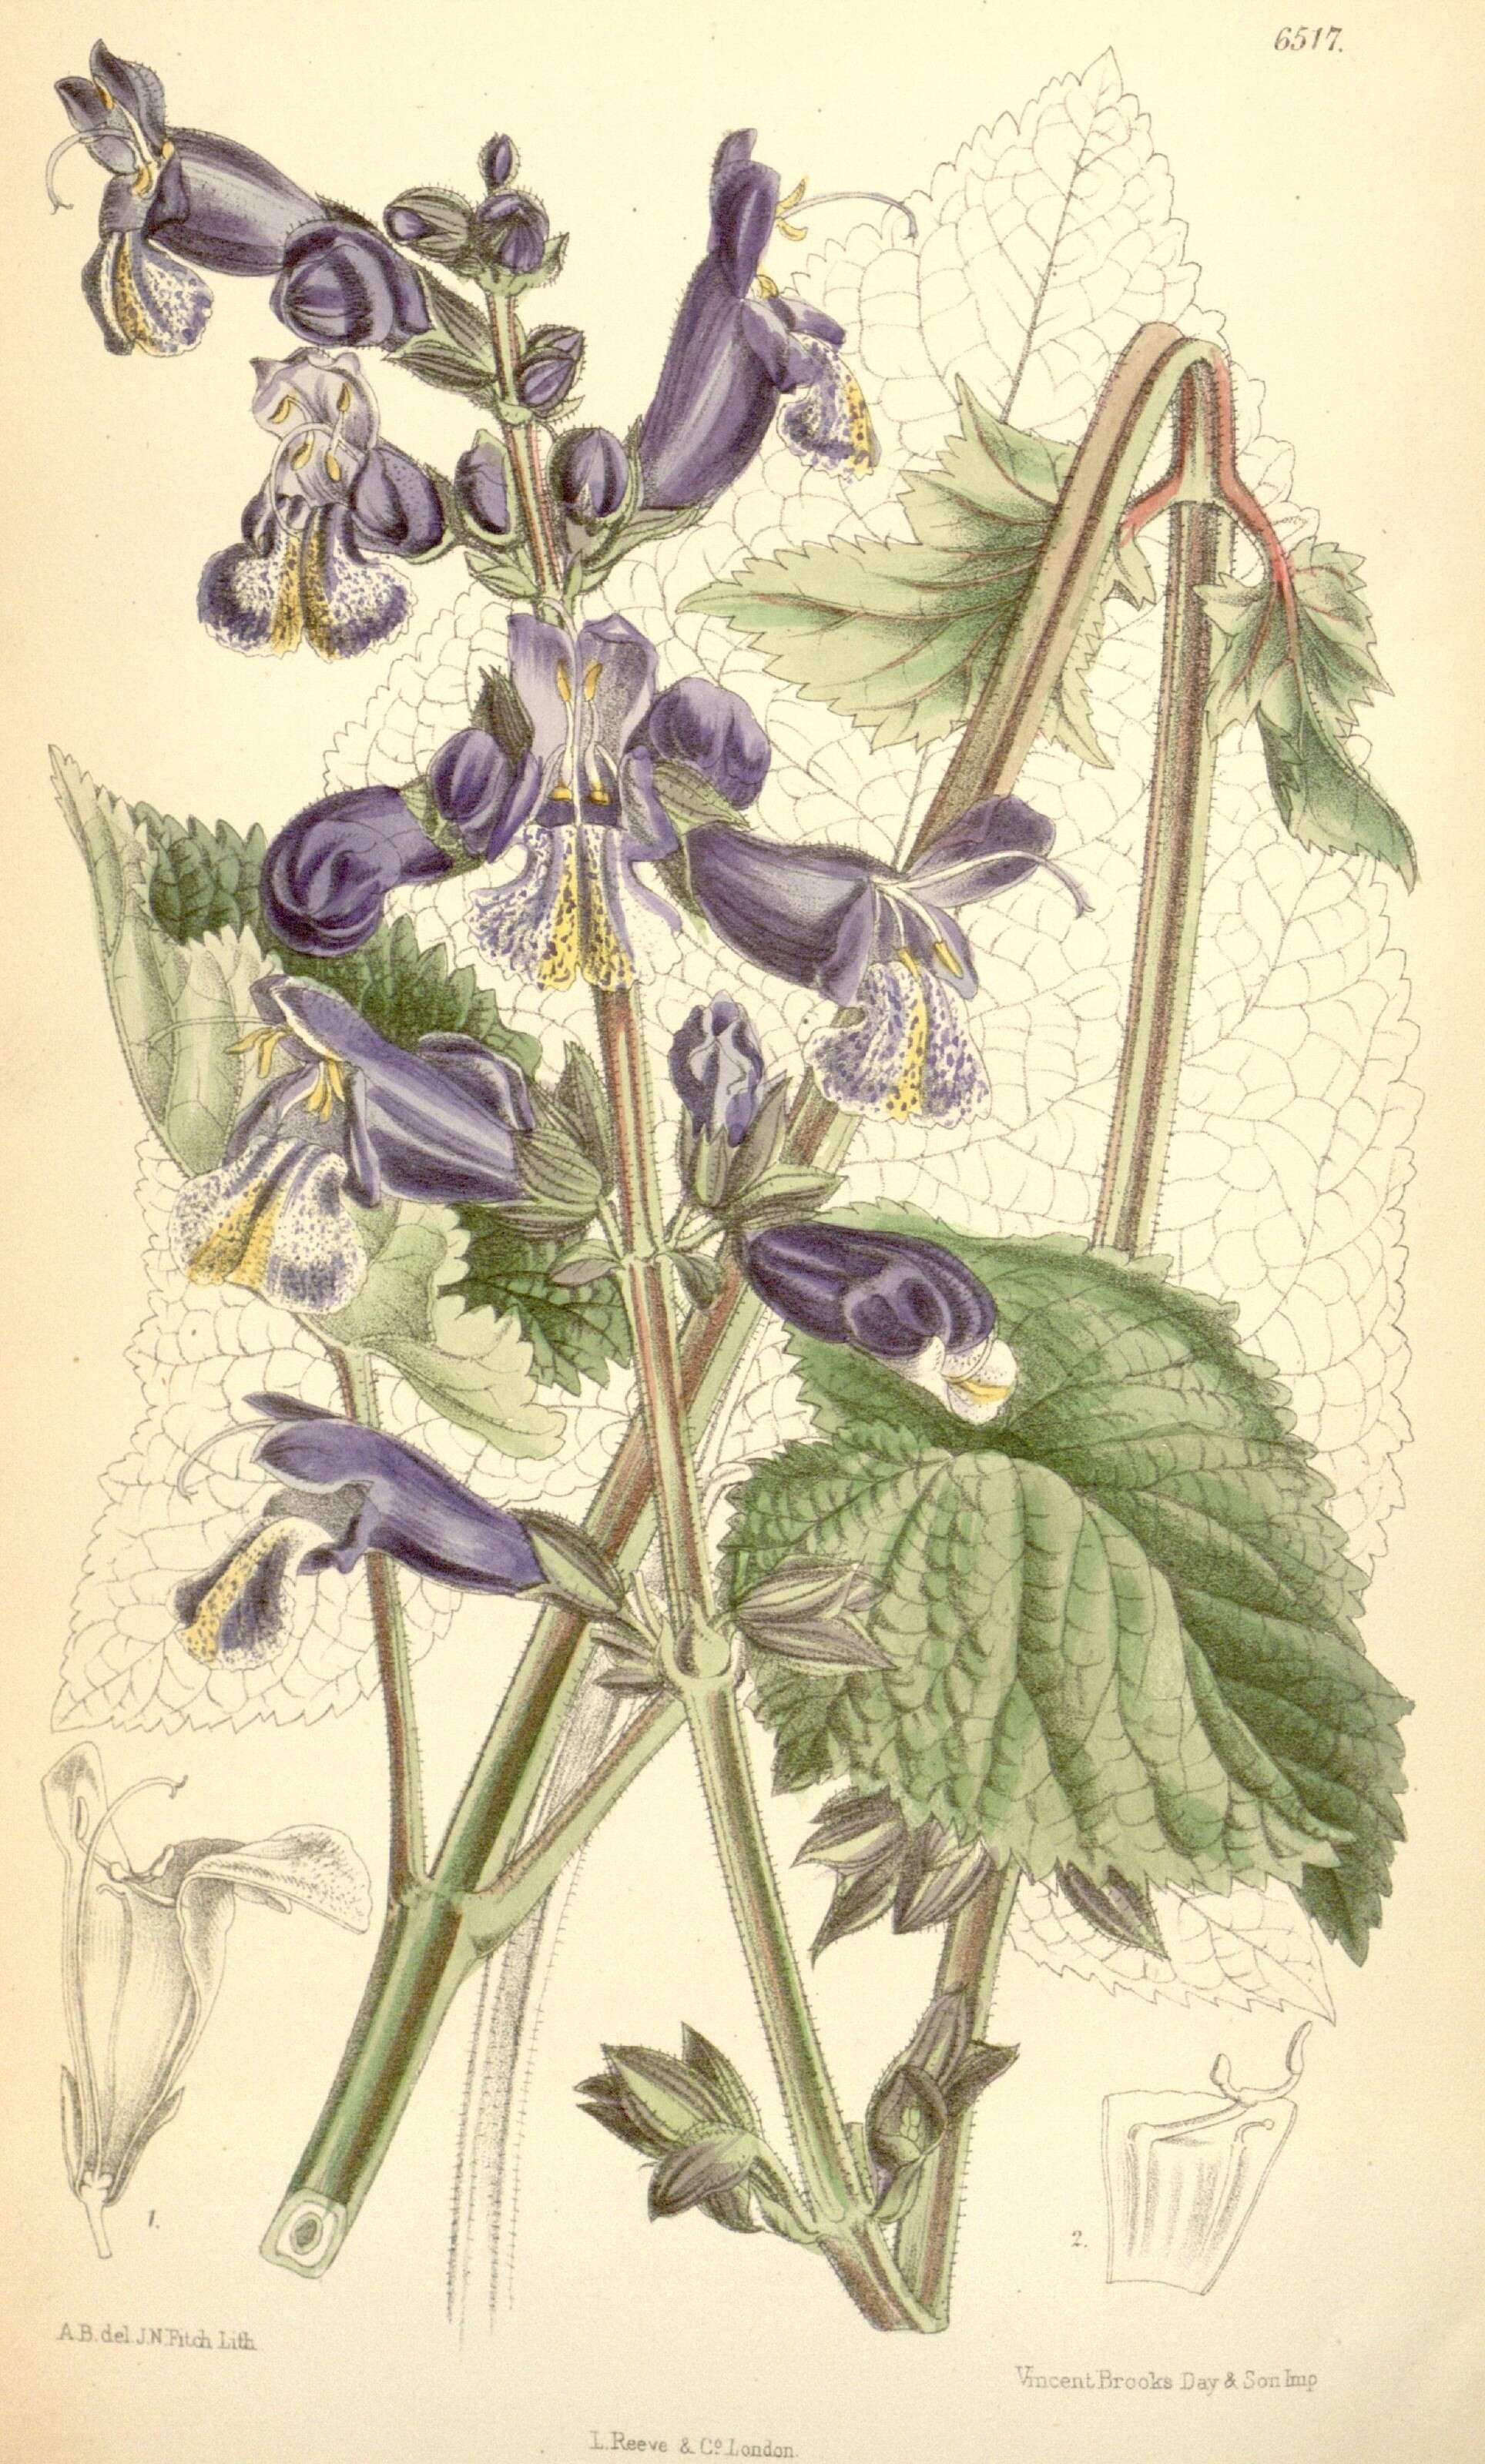 Salvia hians Royle ex Benth. resmi